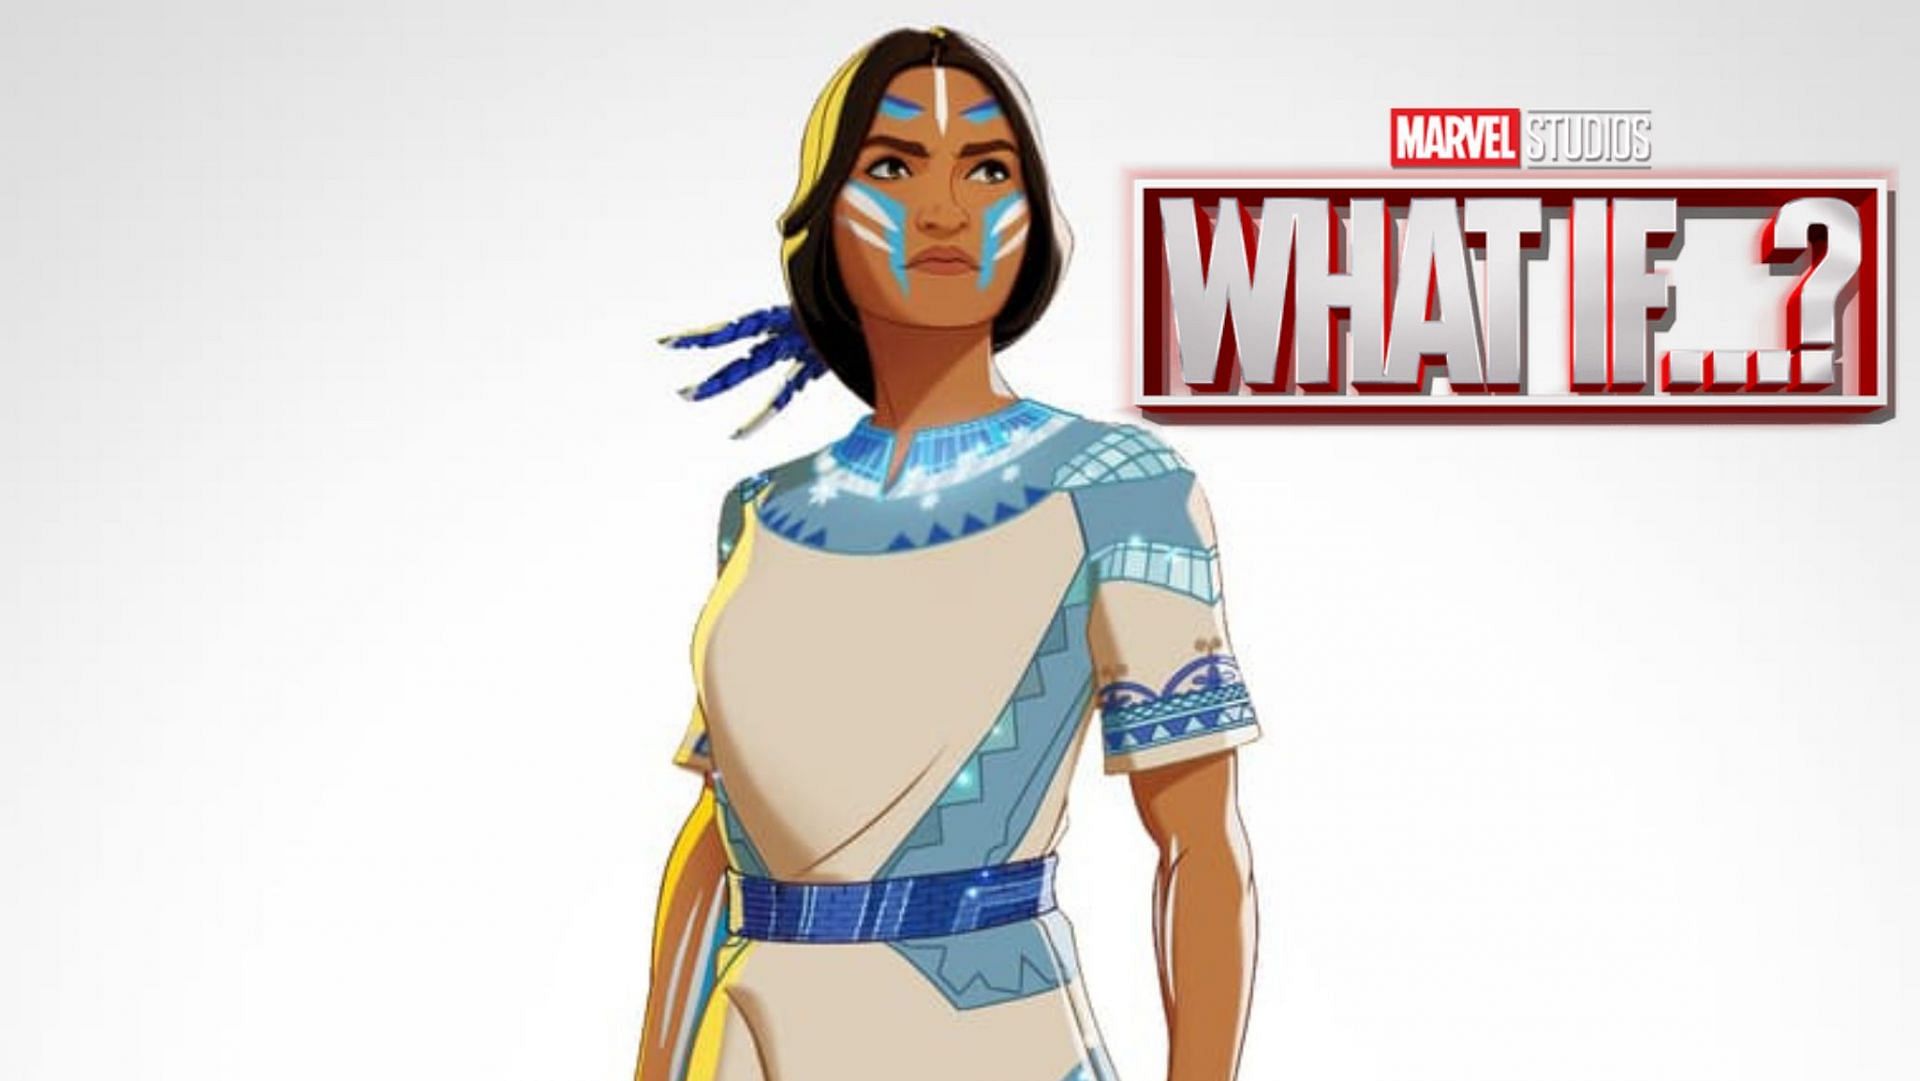 Meet Kahhori, the new Mohawk superhero introduced in Marvel